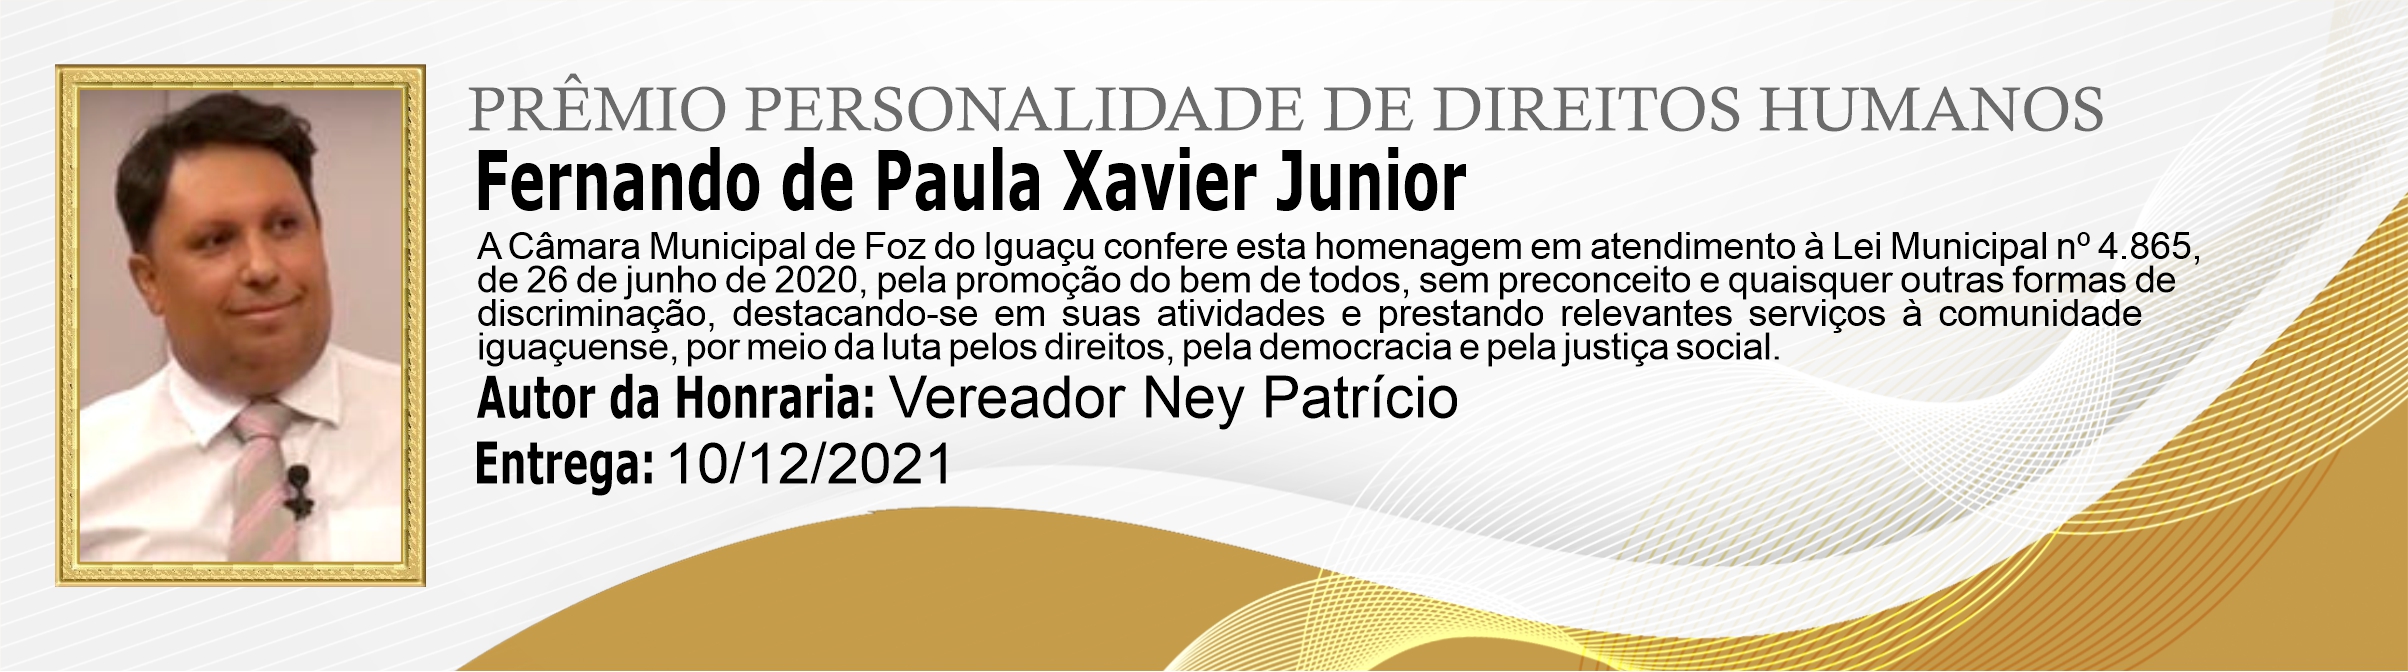 Fernando de Paula Xavier Junior